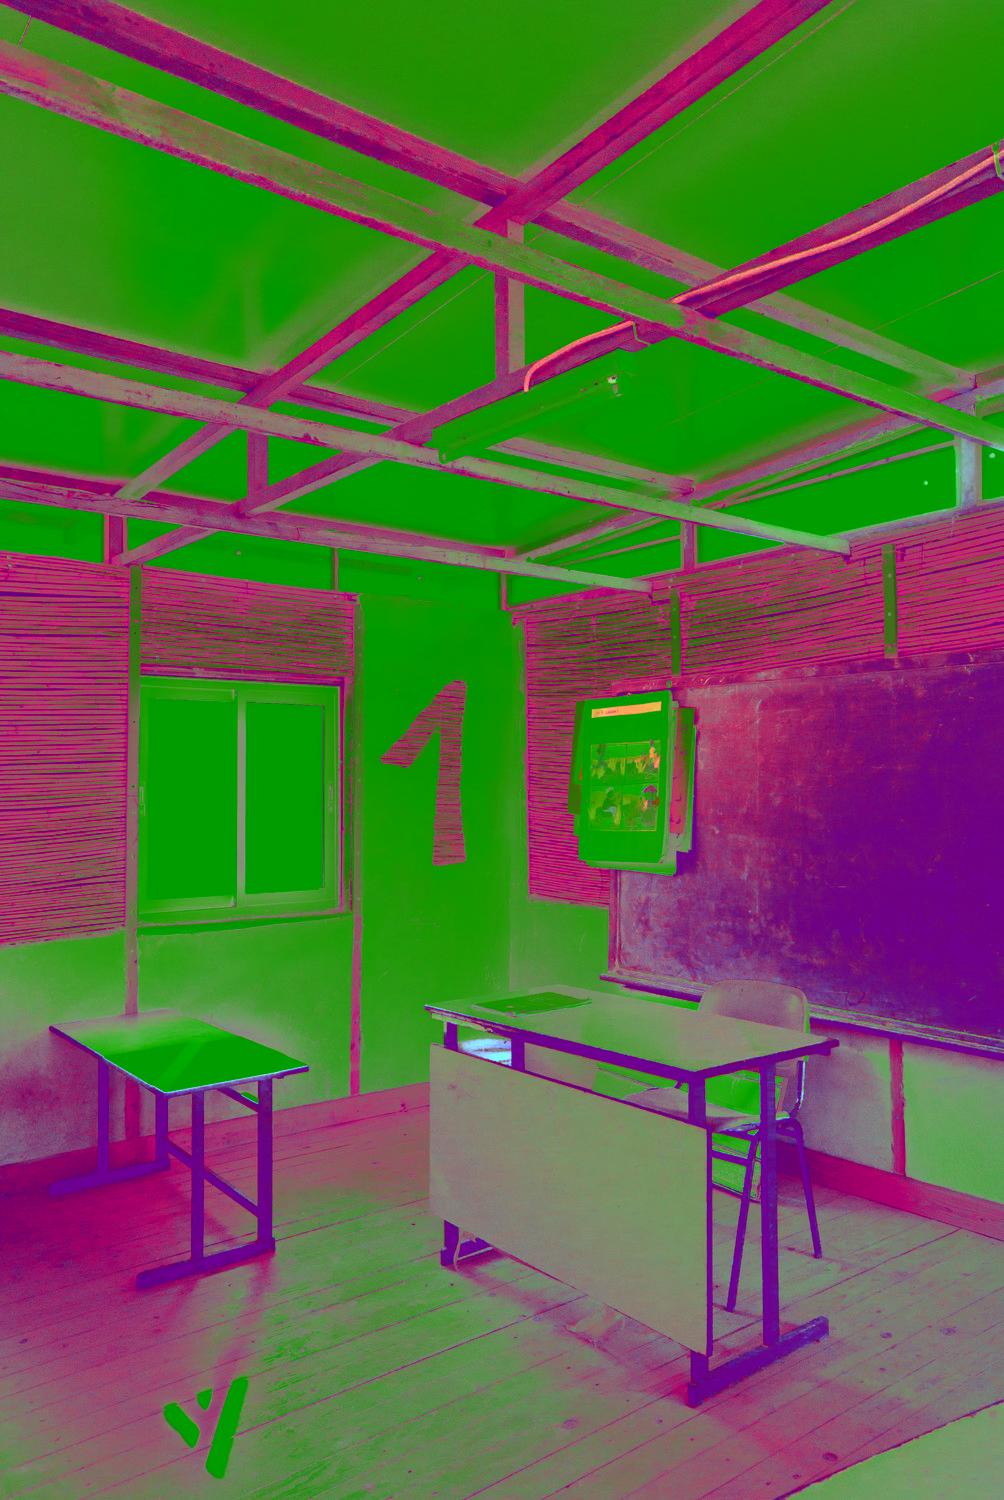 Classroom N°1 - an interior view